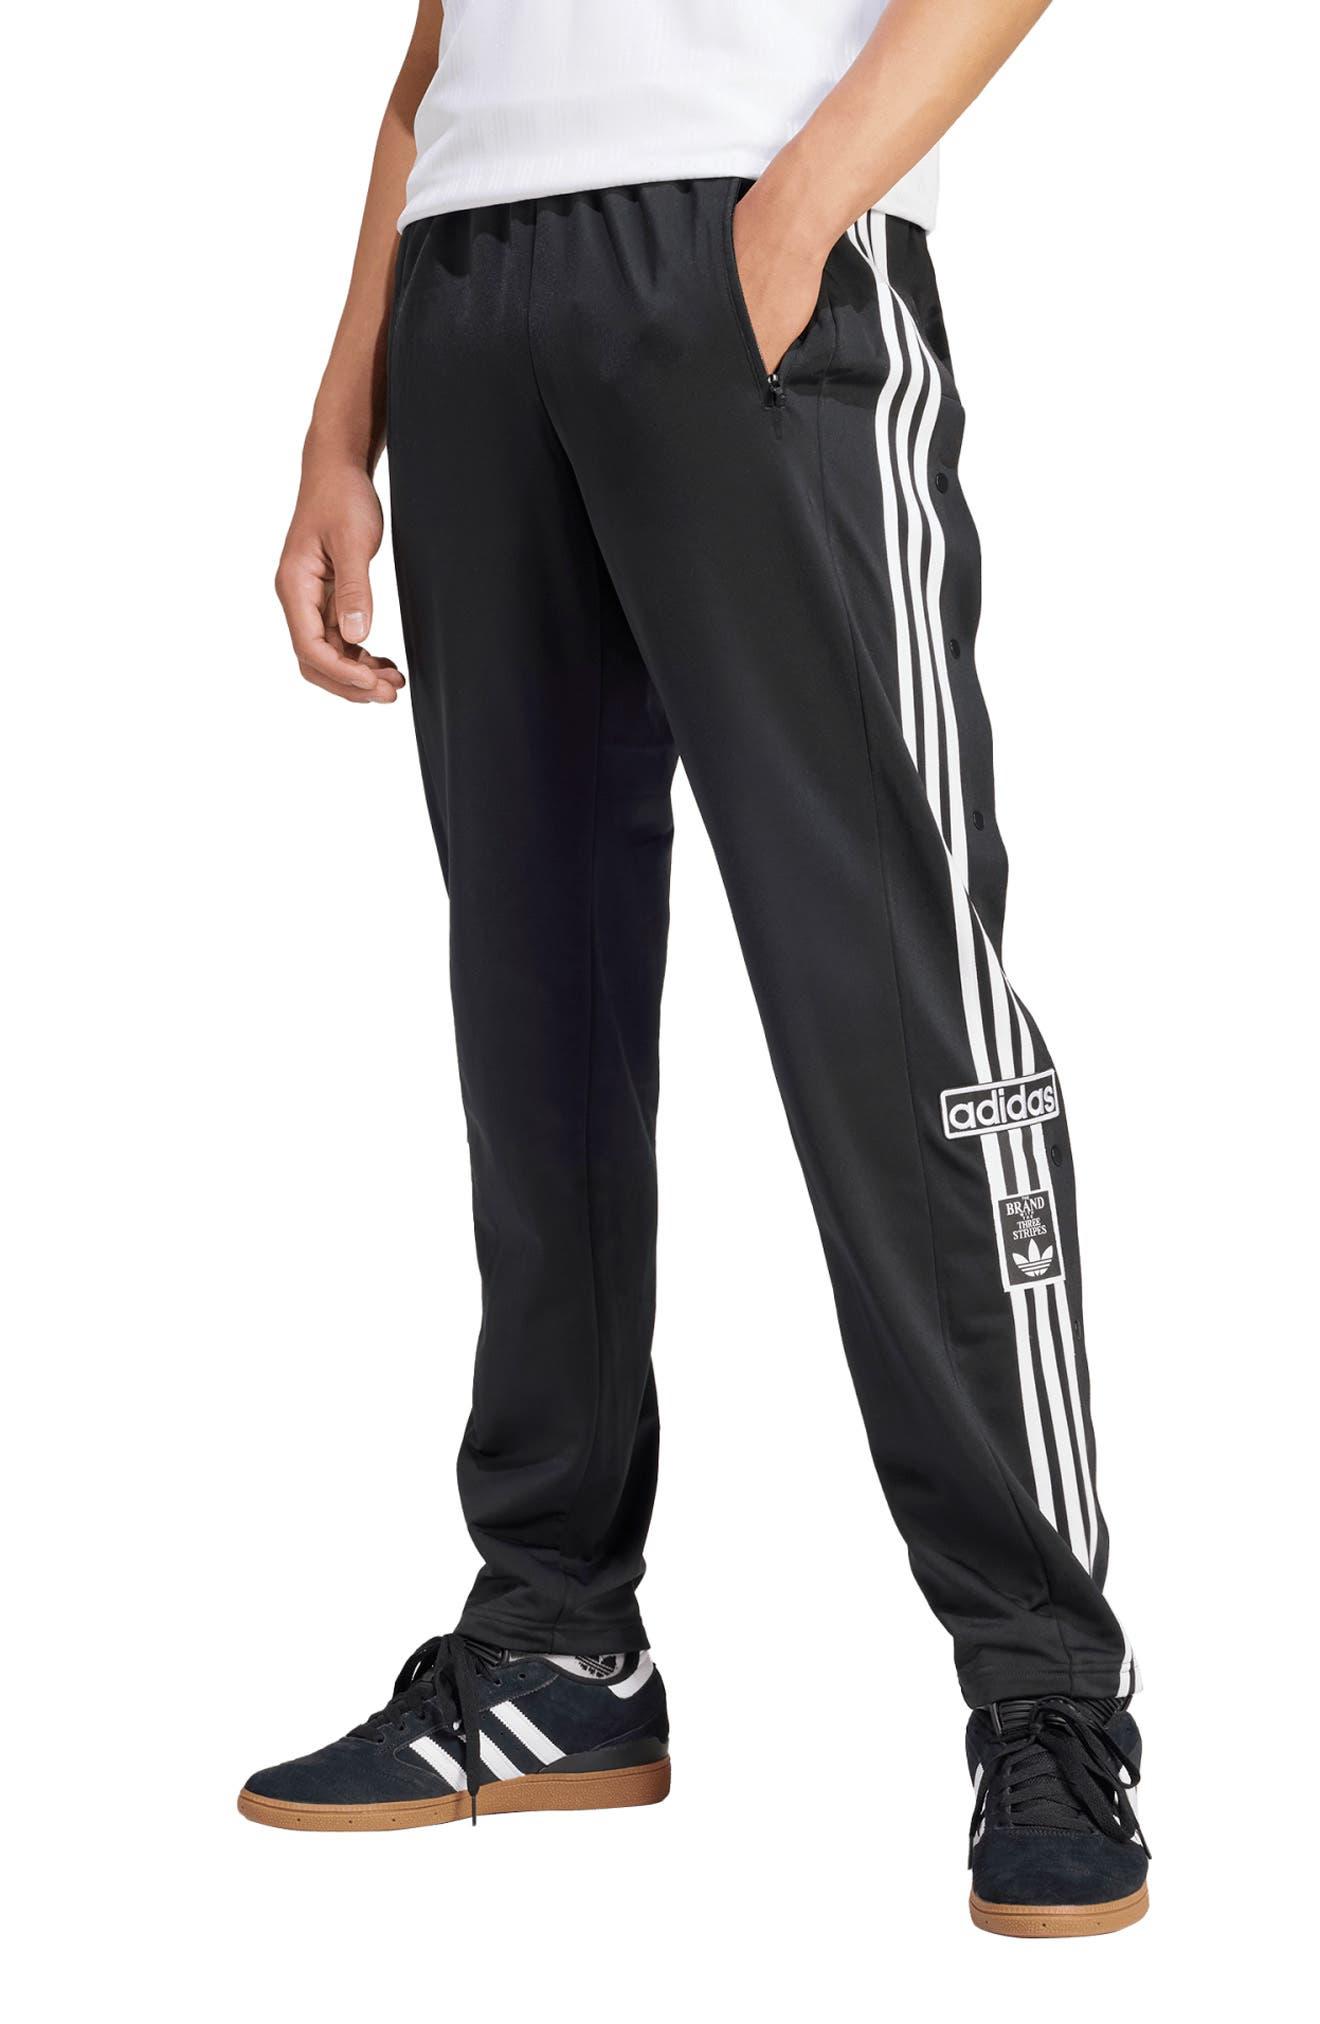 Men's Black Polyester Side Stripe Sweatpants